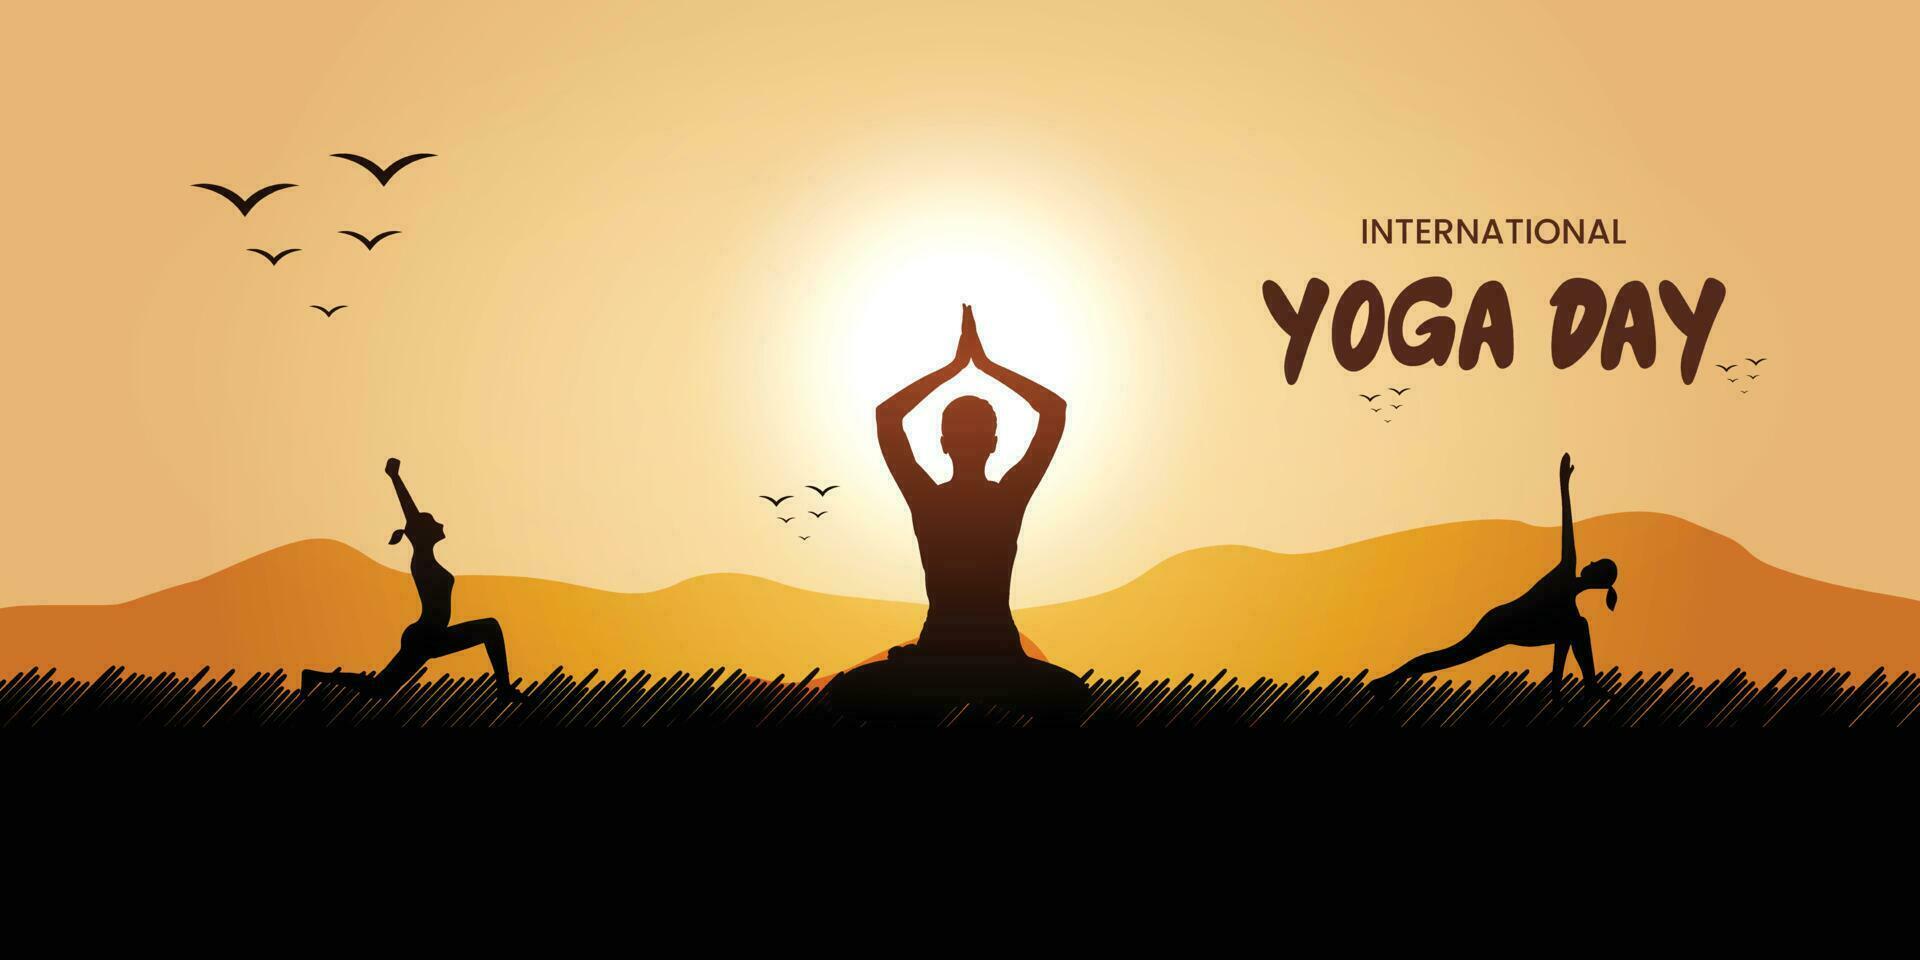 yoga day banner design vector file